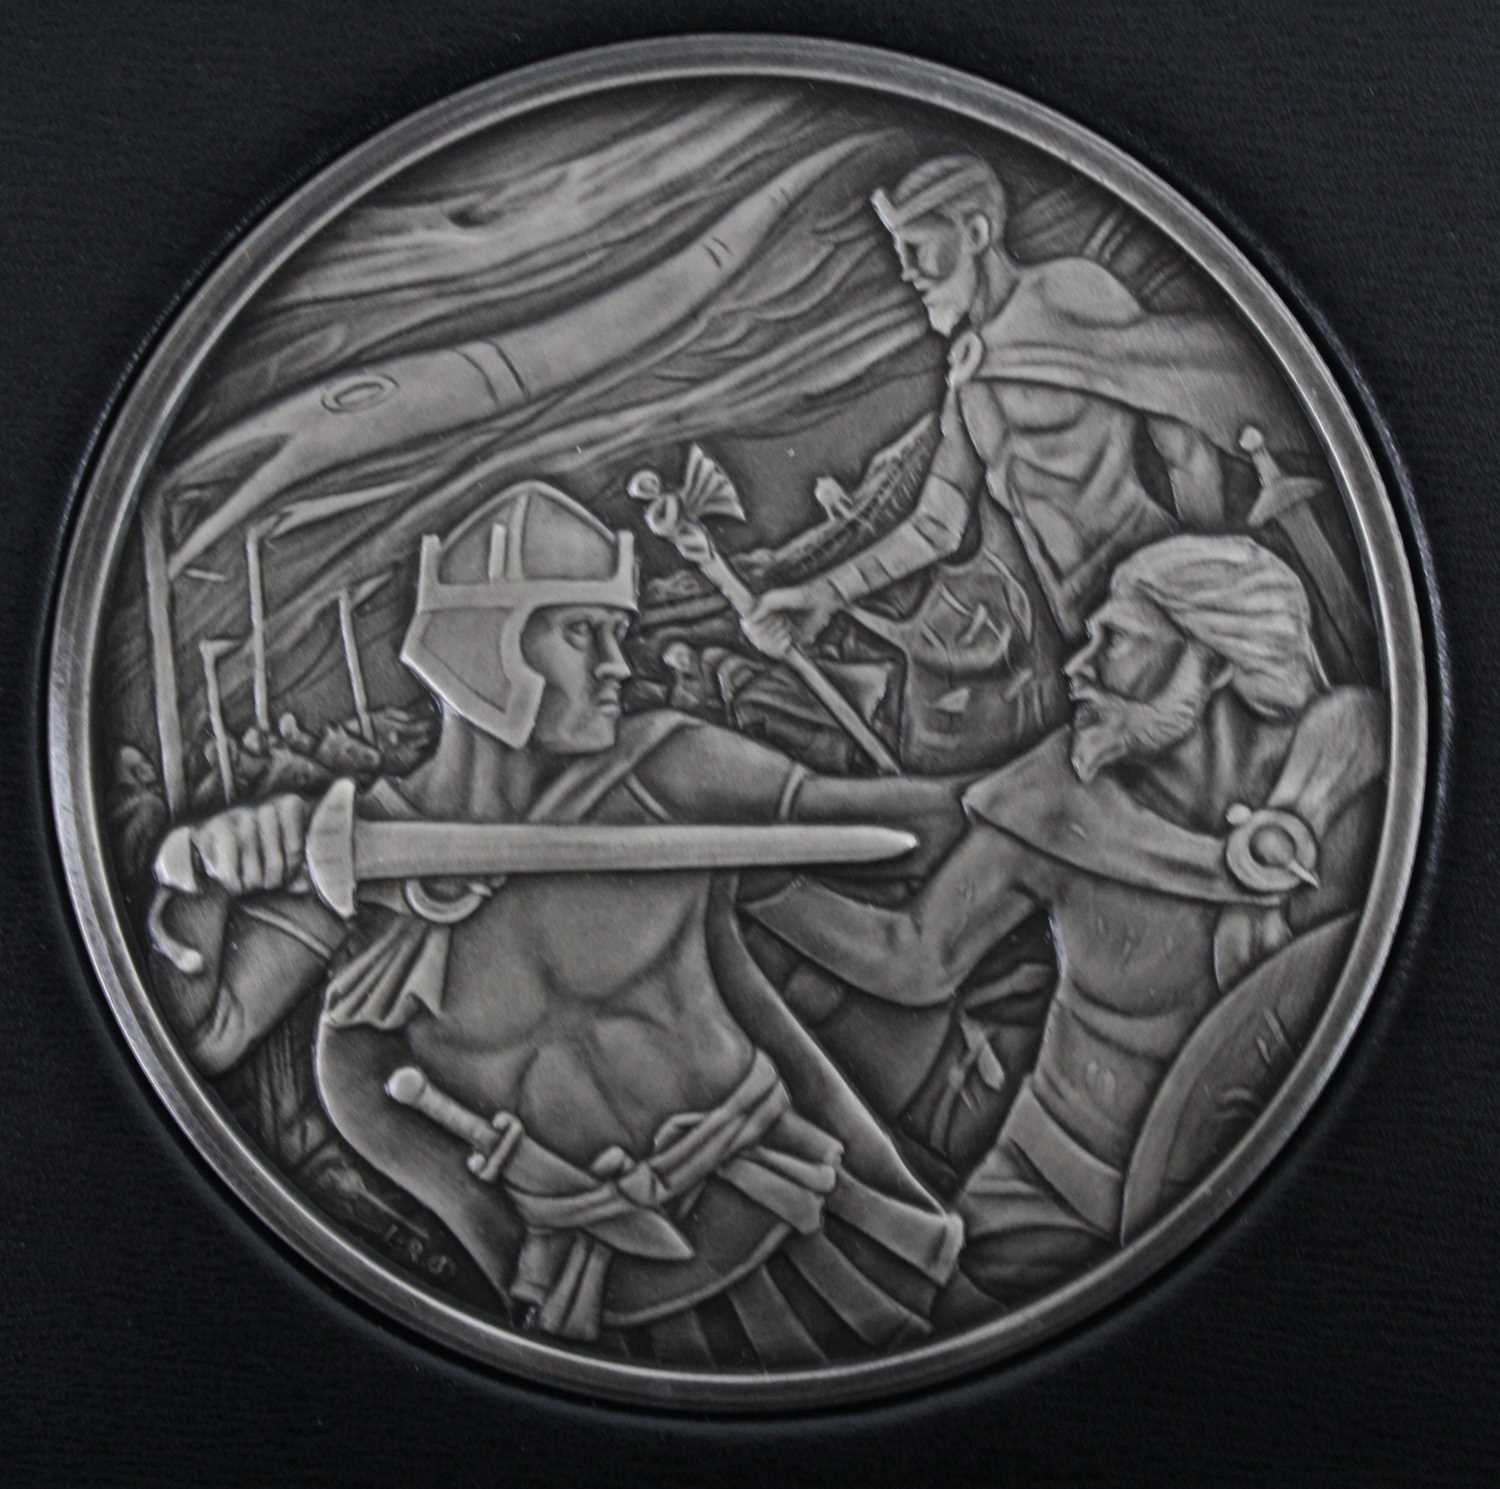 United Kingdom, The Royal Mint, Arthurian Legend Masterpiece 8oz commemorative medal, limited - Image 2 of 2